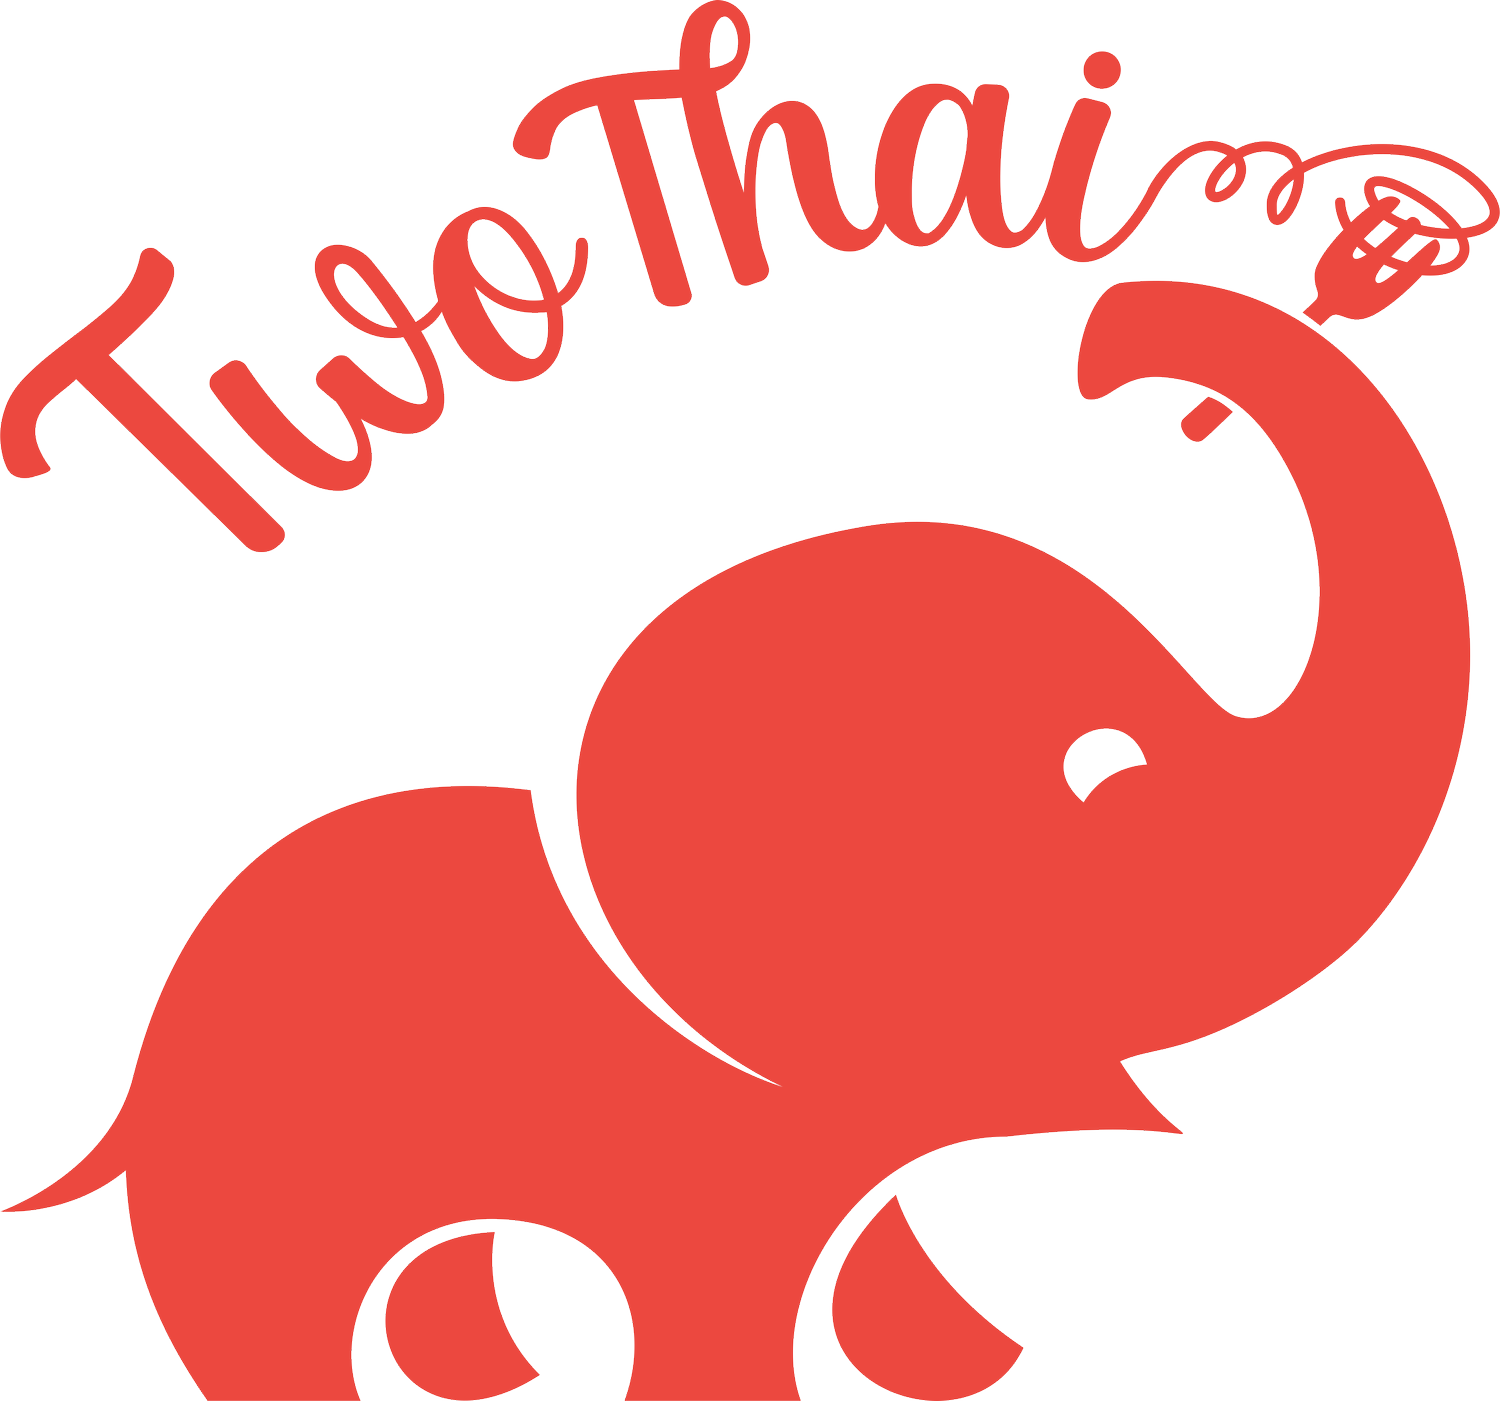 Two Thai